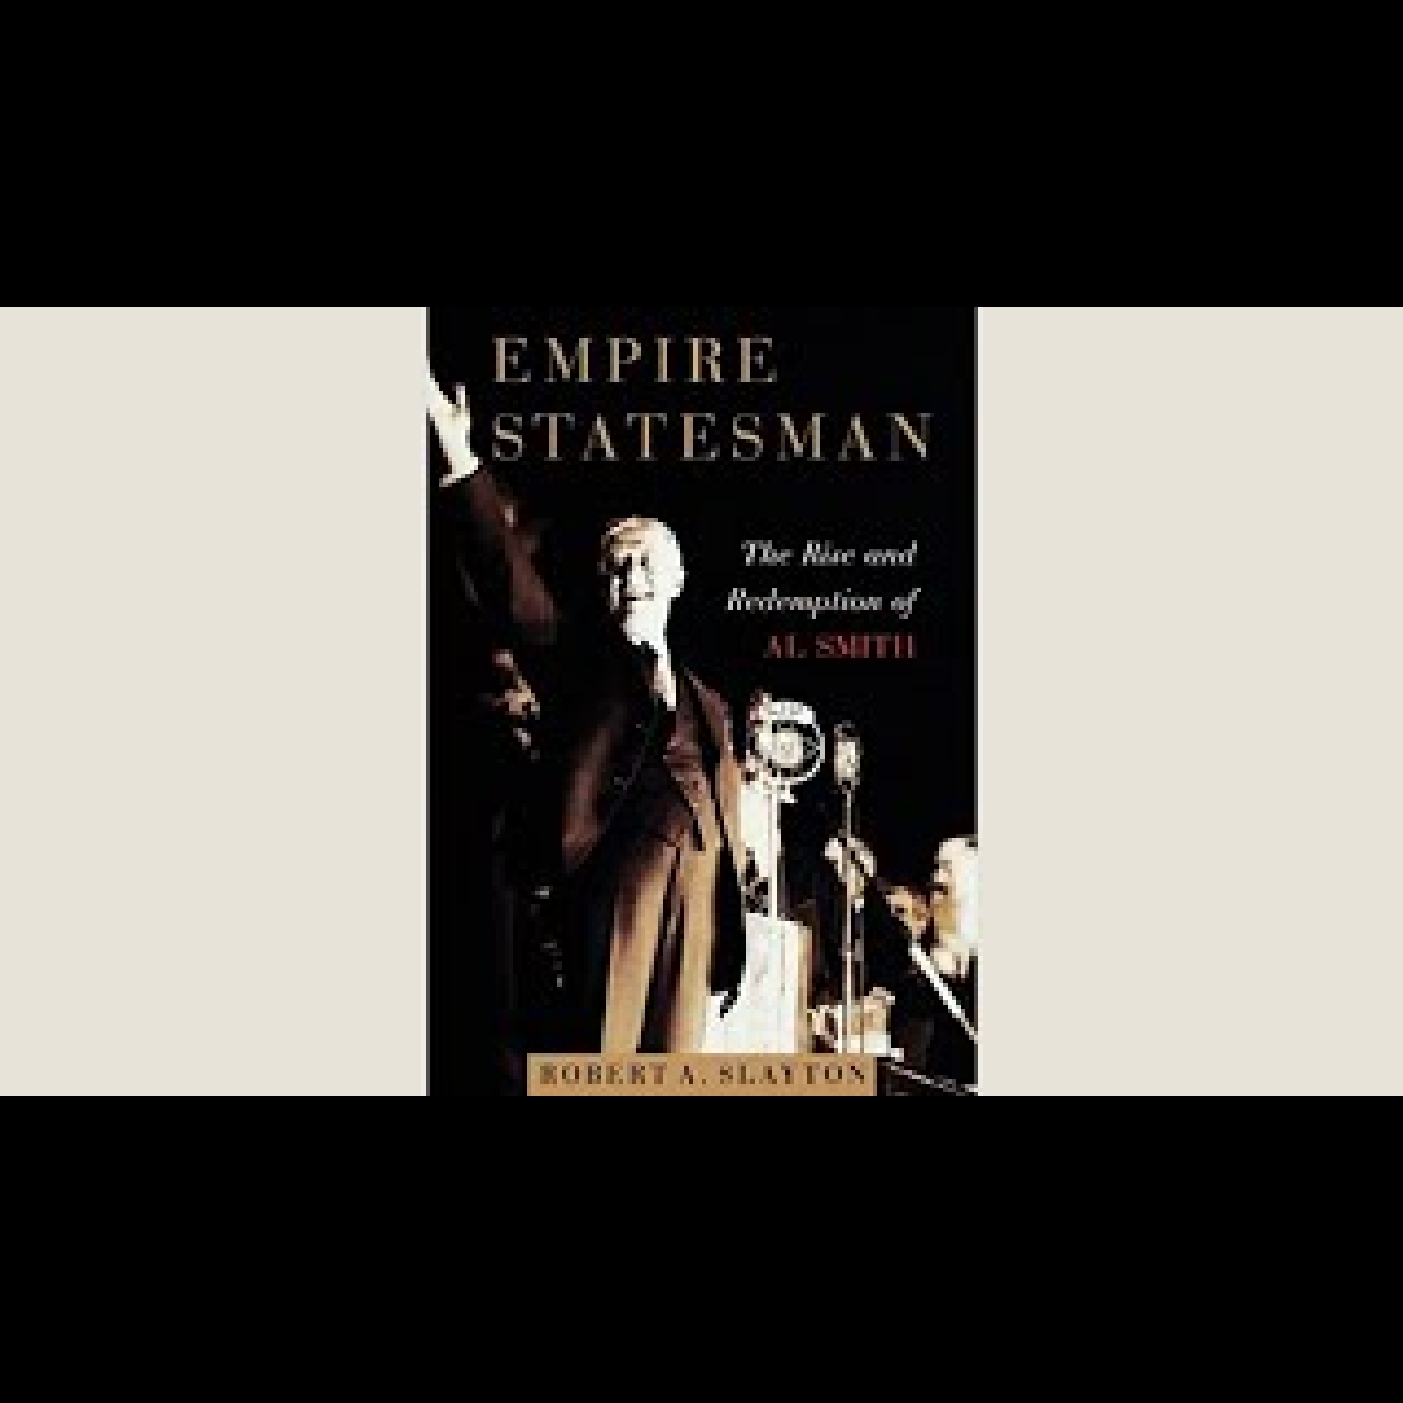 Al Smith #1 - Empire Statesman - Professor Robert Slayton